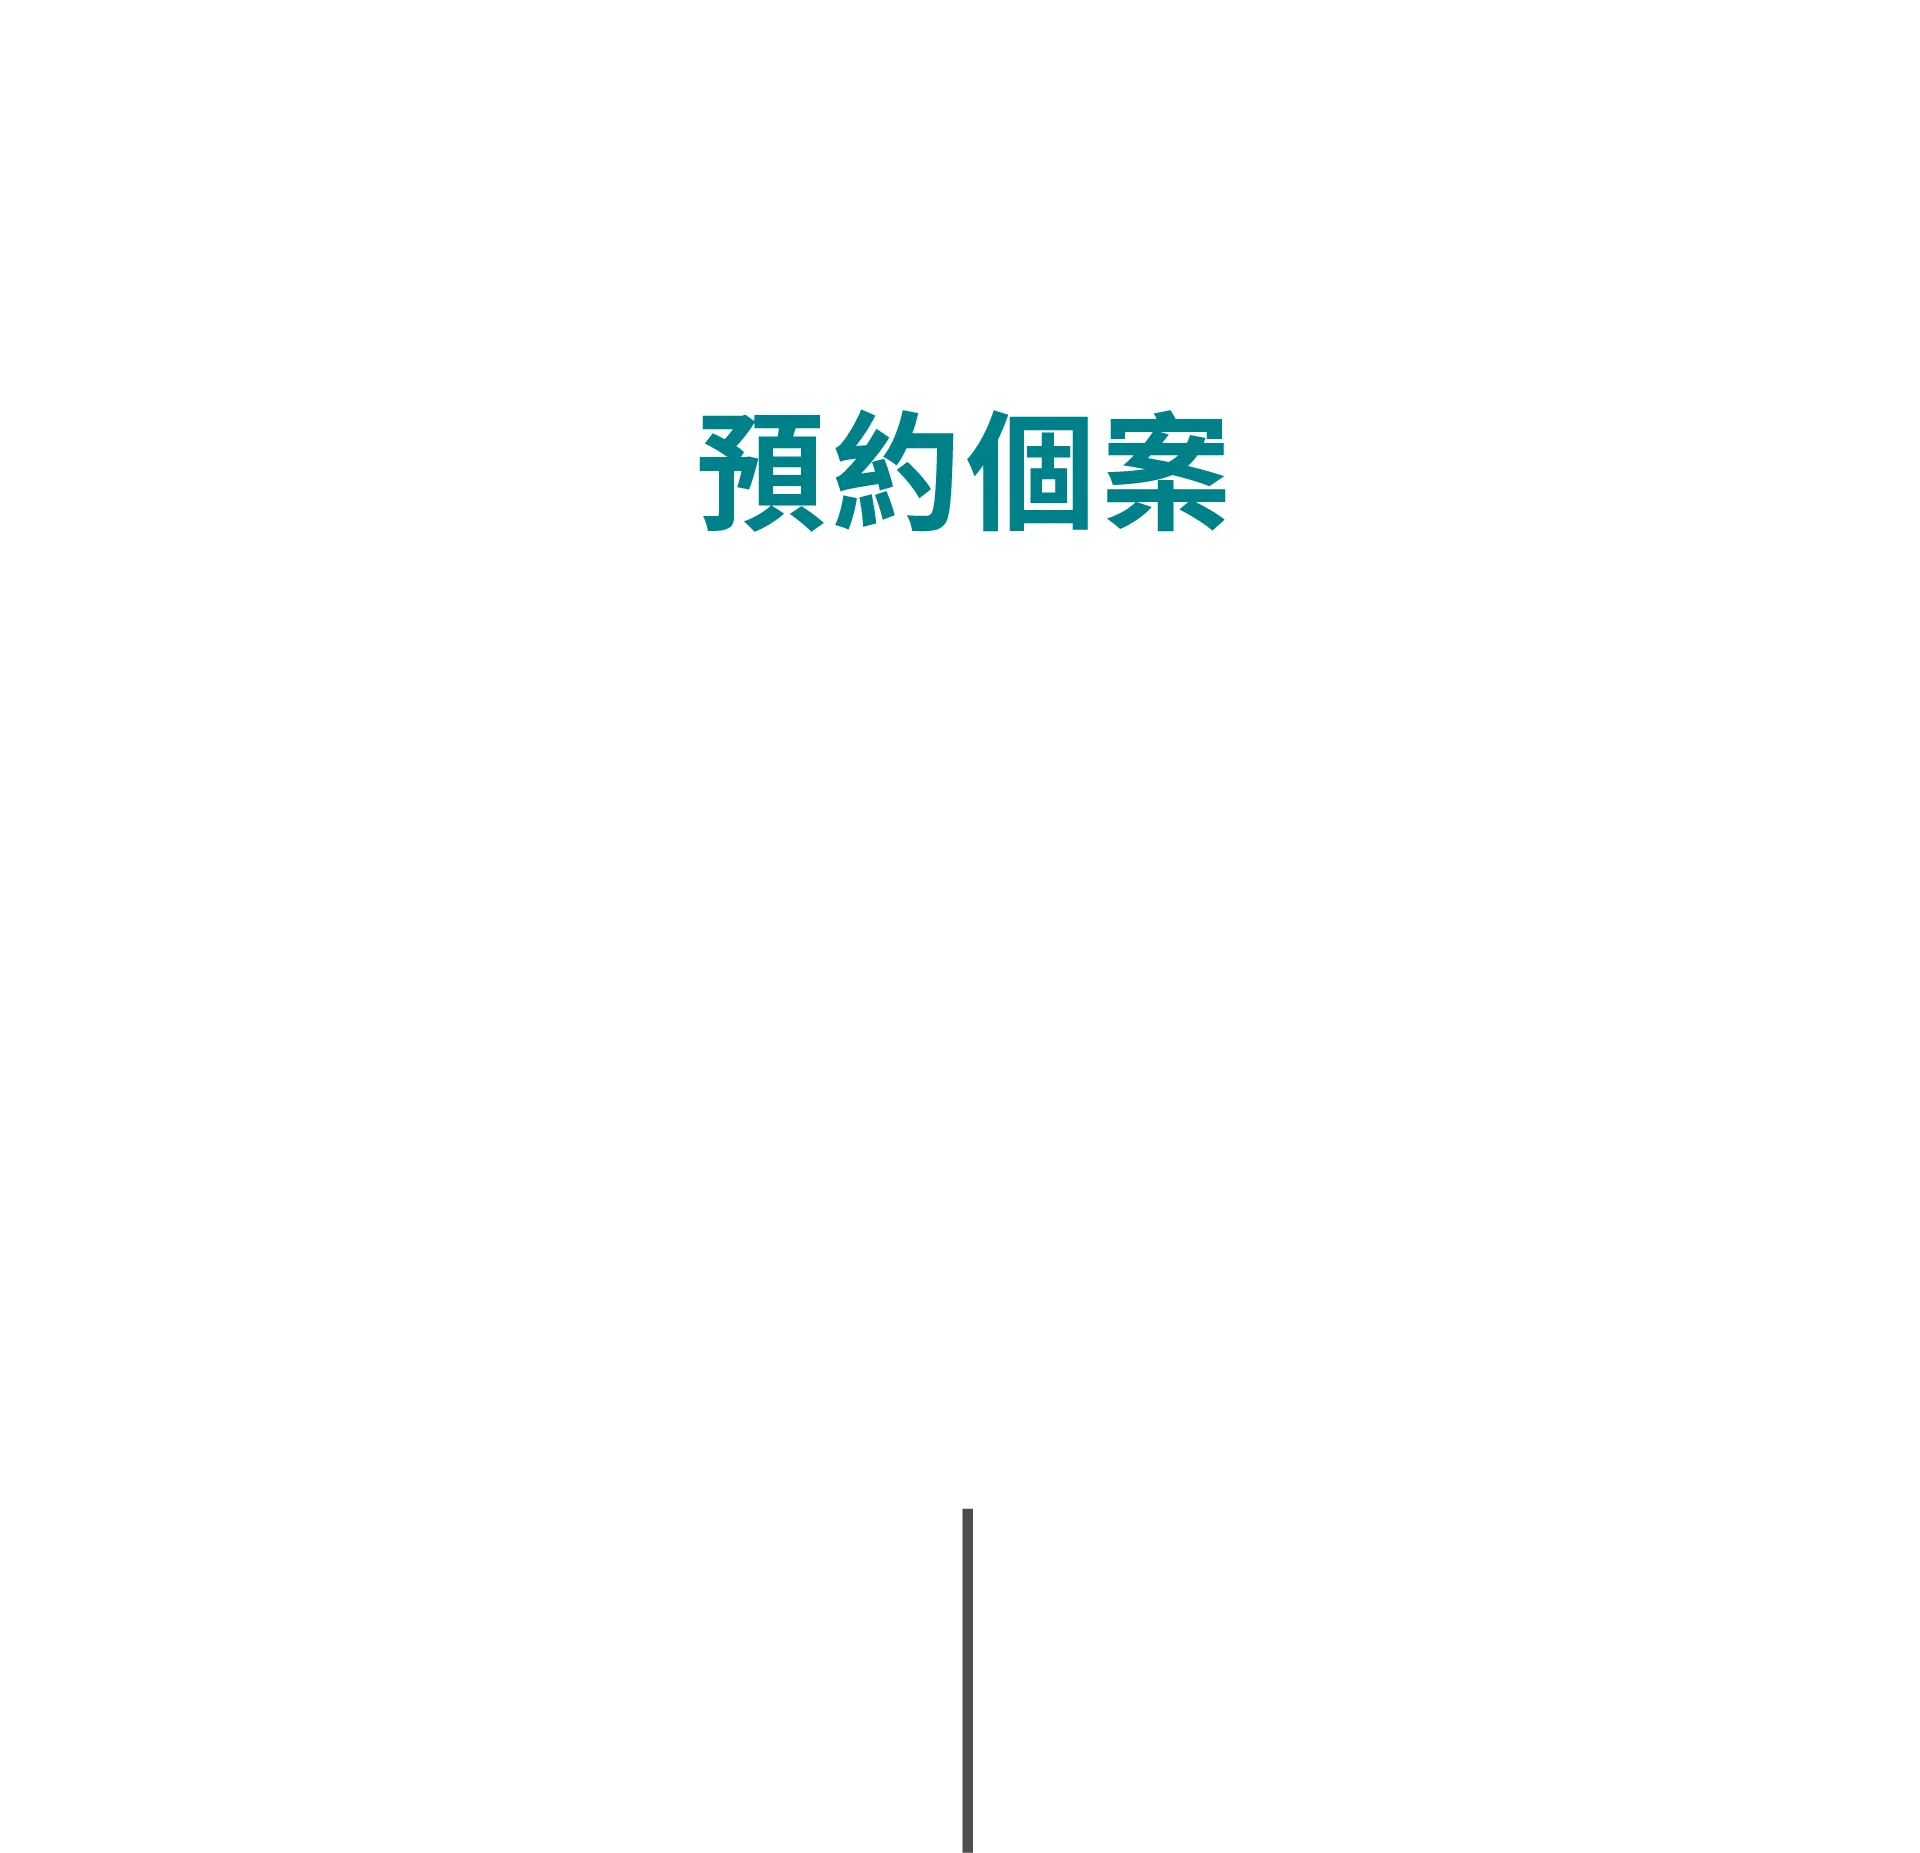 Reservation Title